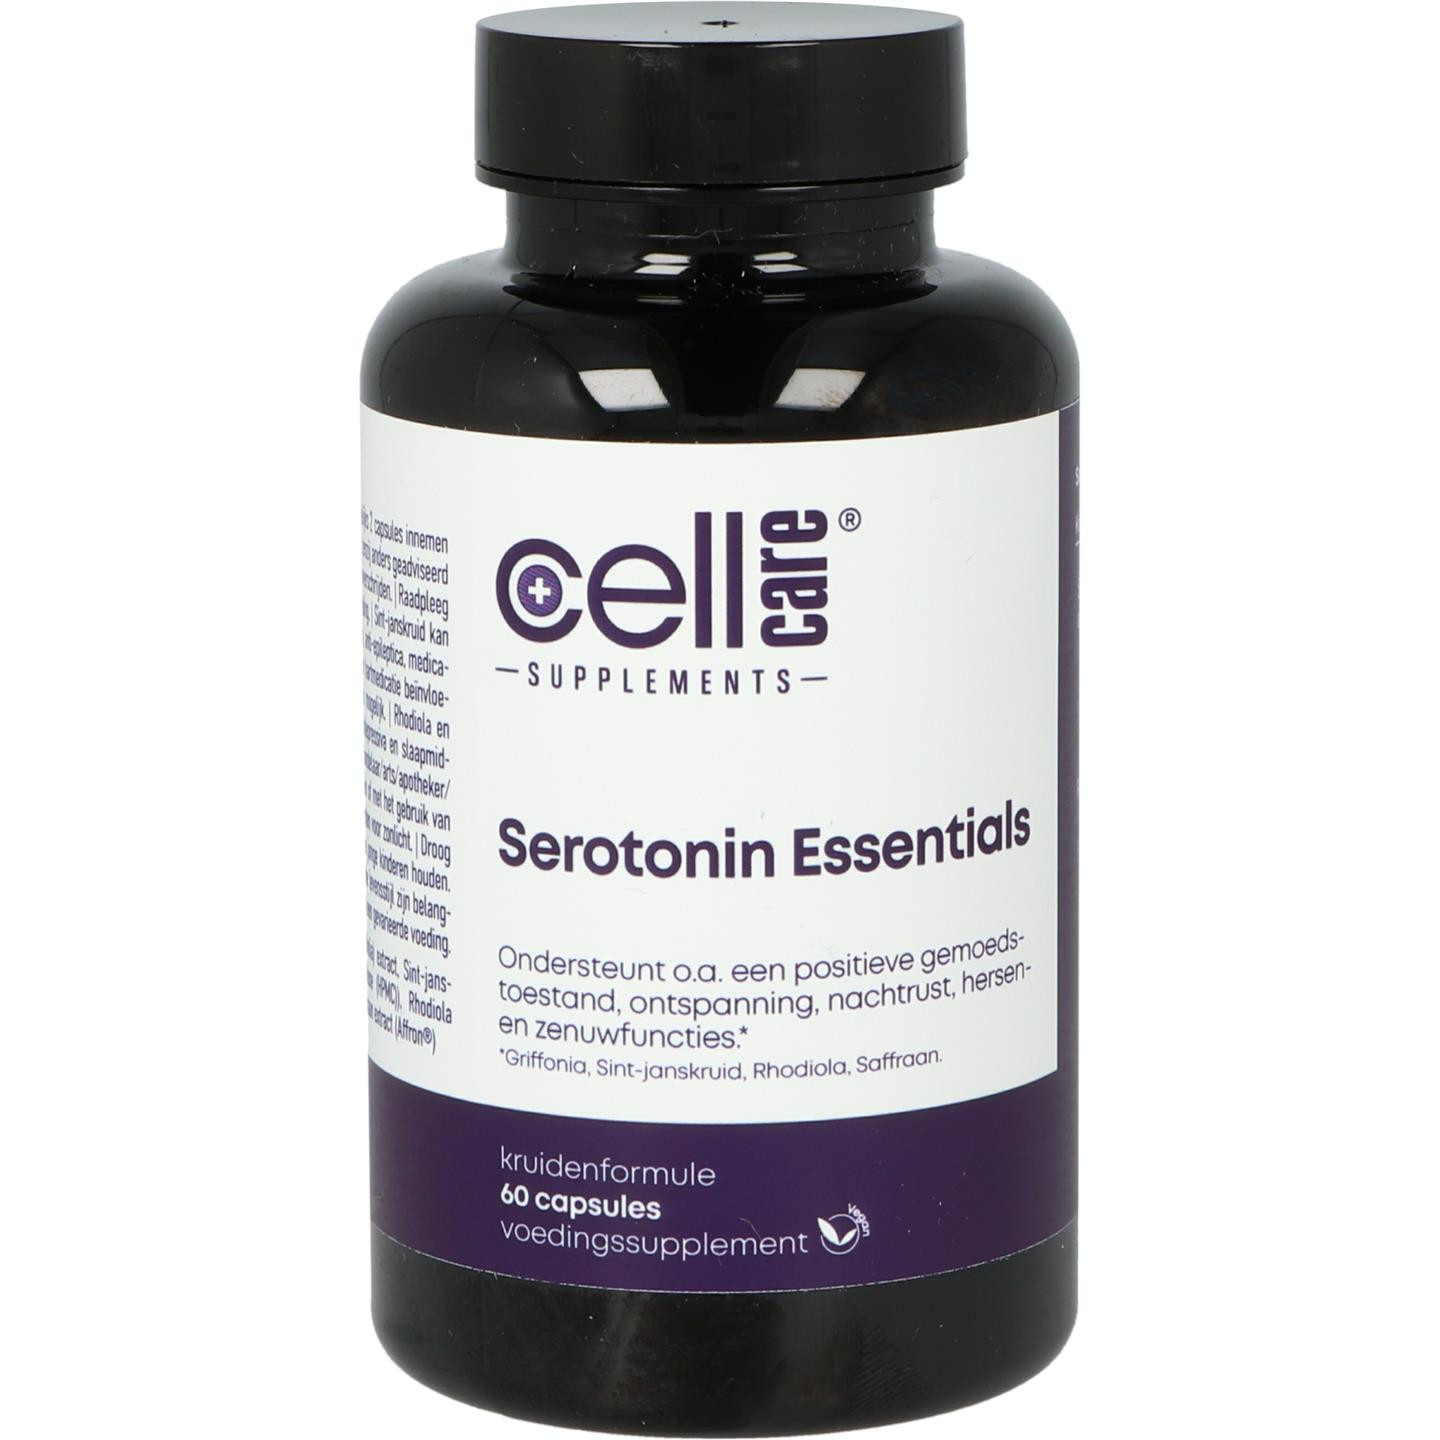 Serotonin Essentials